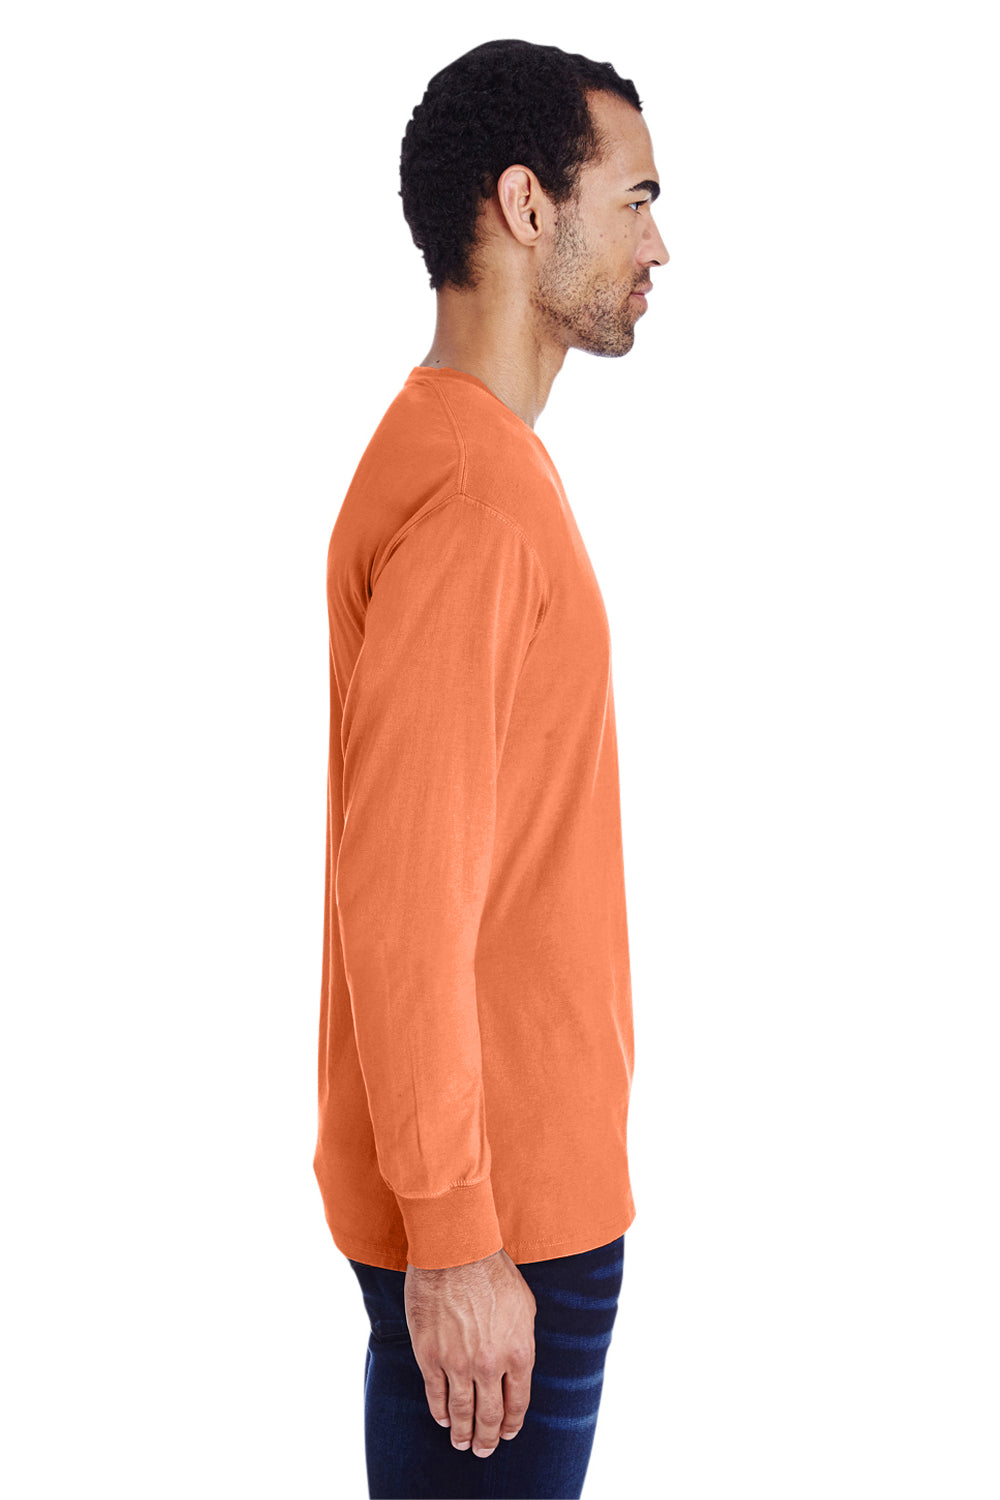 ComfortWash by Hanes GDH200 Long Sleeve Crewneck T-Shirt Horizon Orange Side